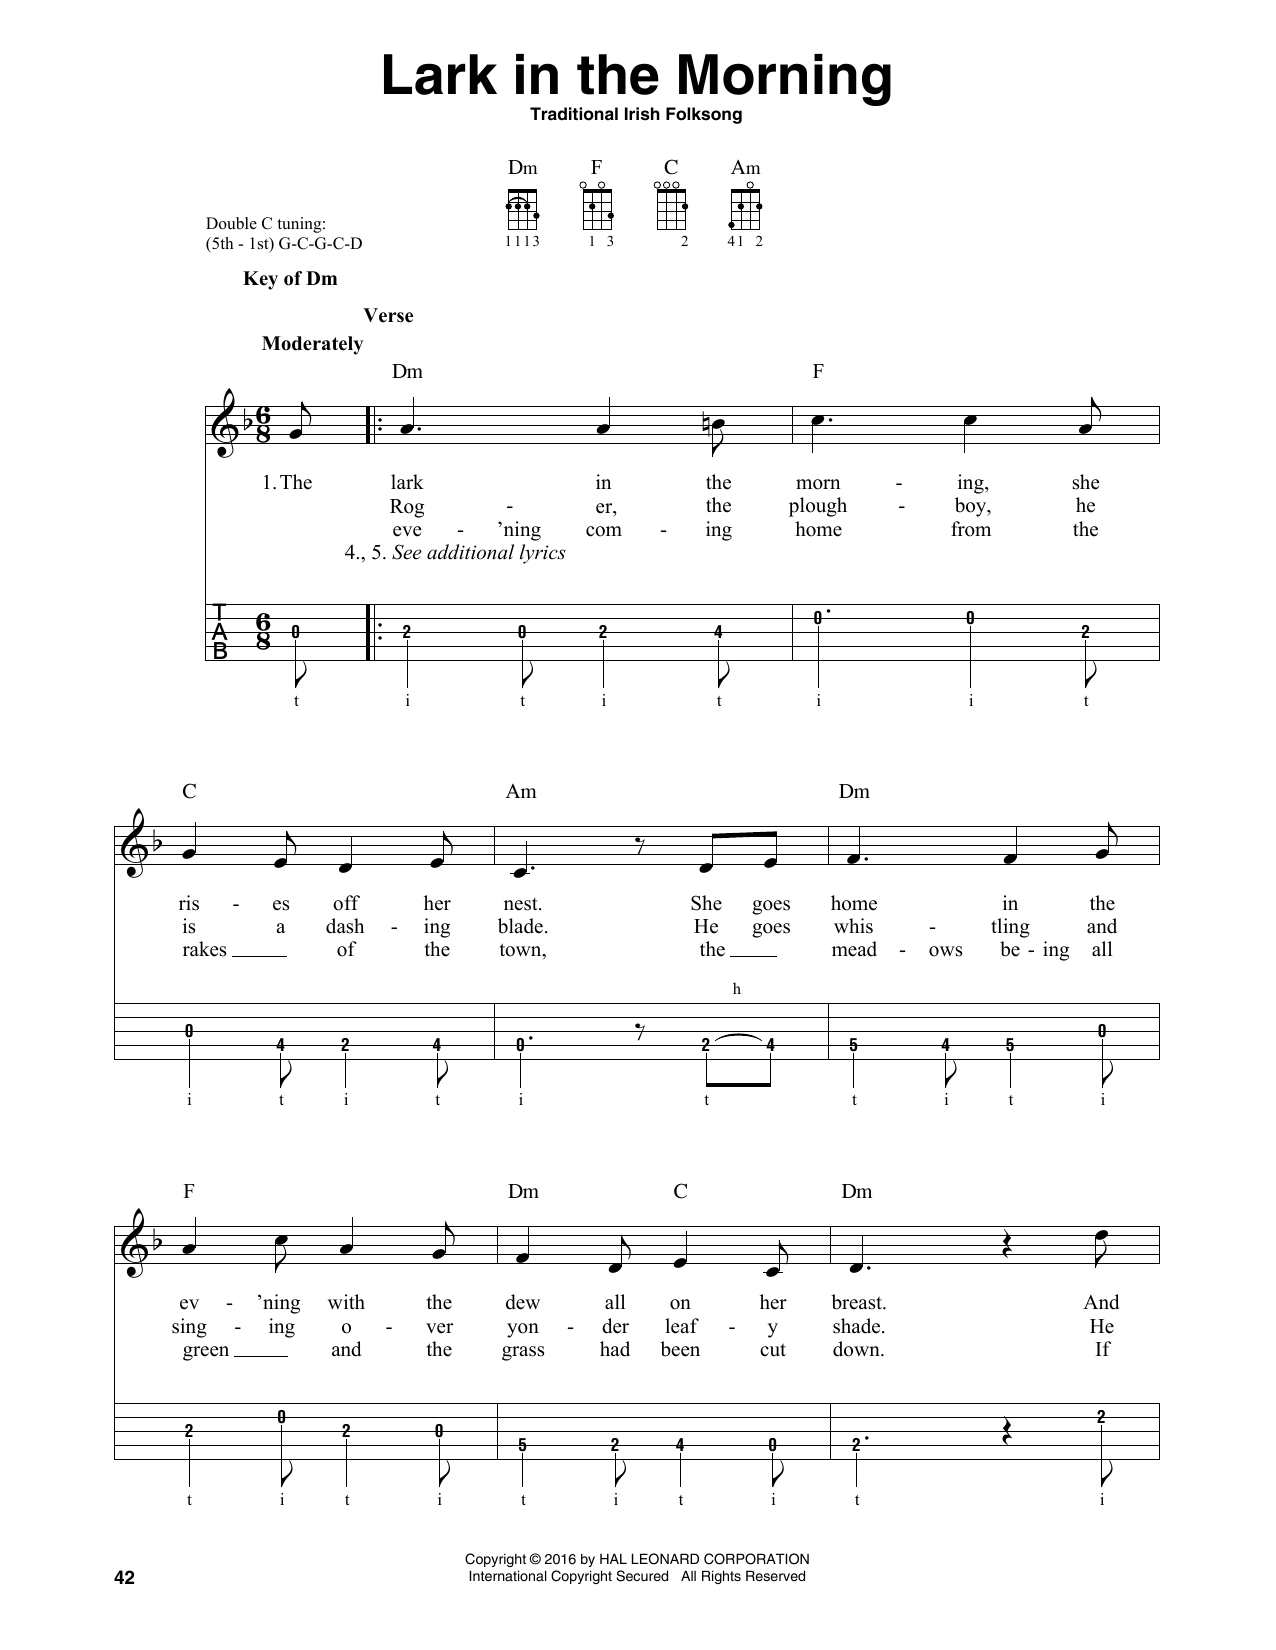 Traditional Irish Folk Song Lark In The Morning Sheet Music Notes & Chords for Banjo - Download or Print PDF